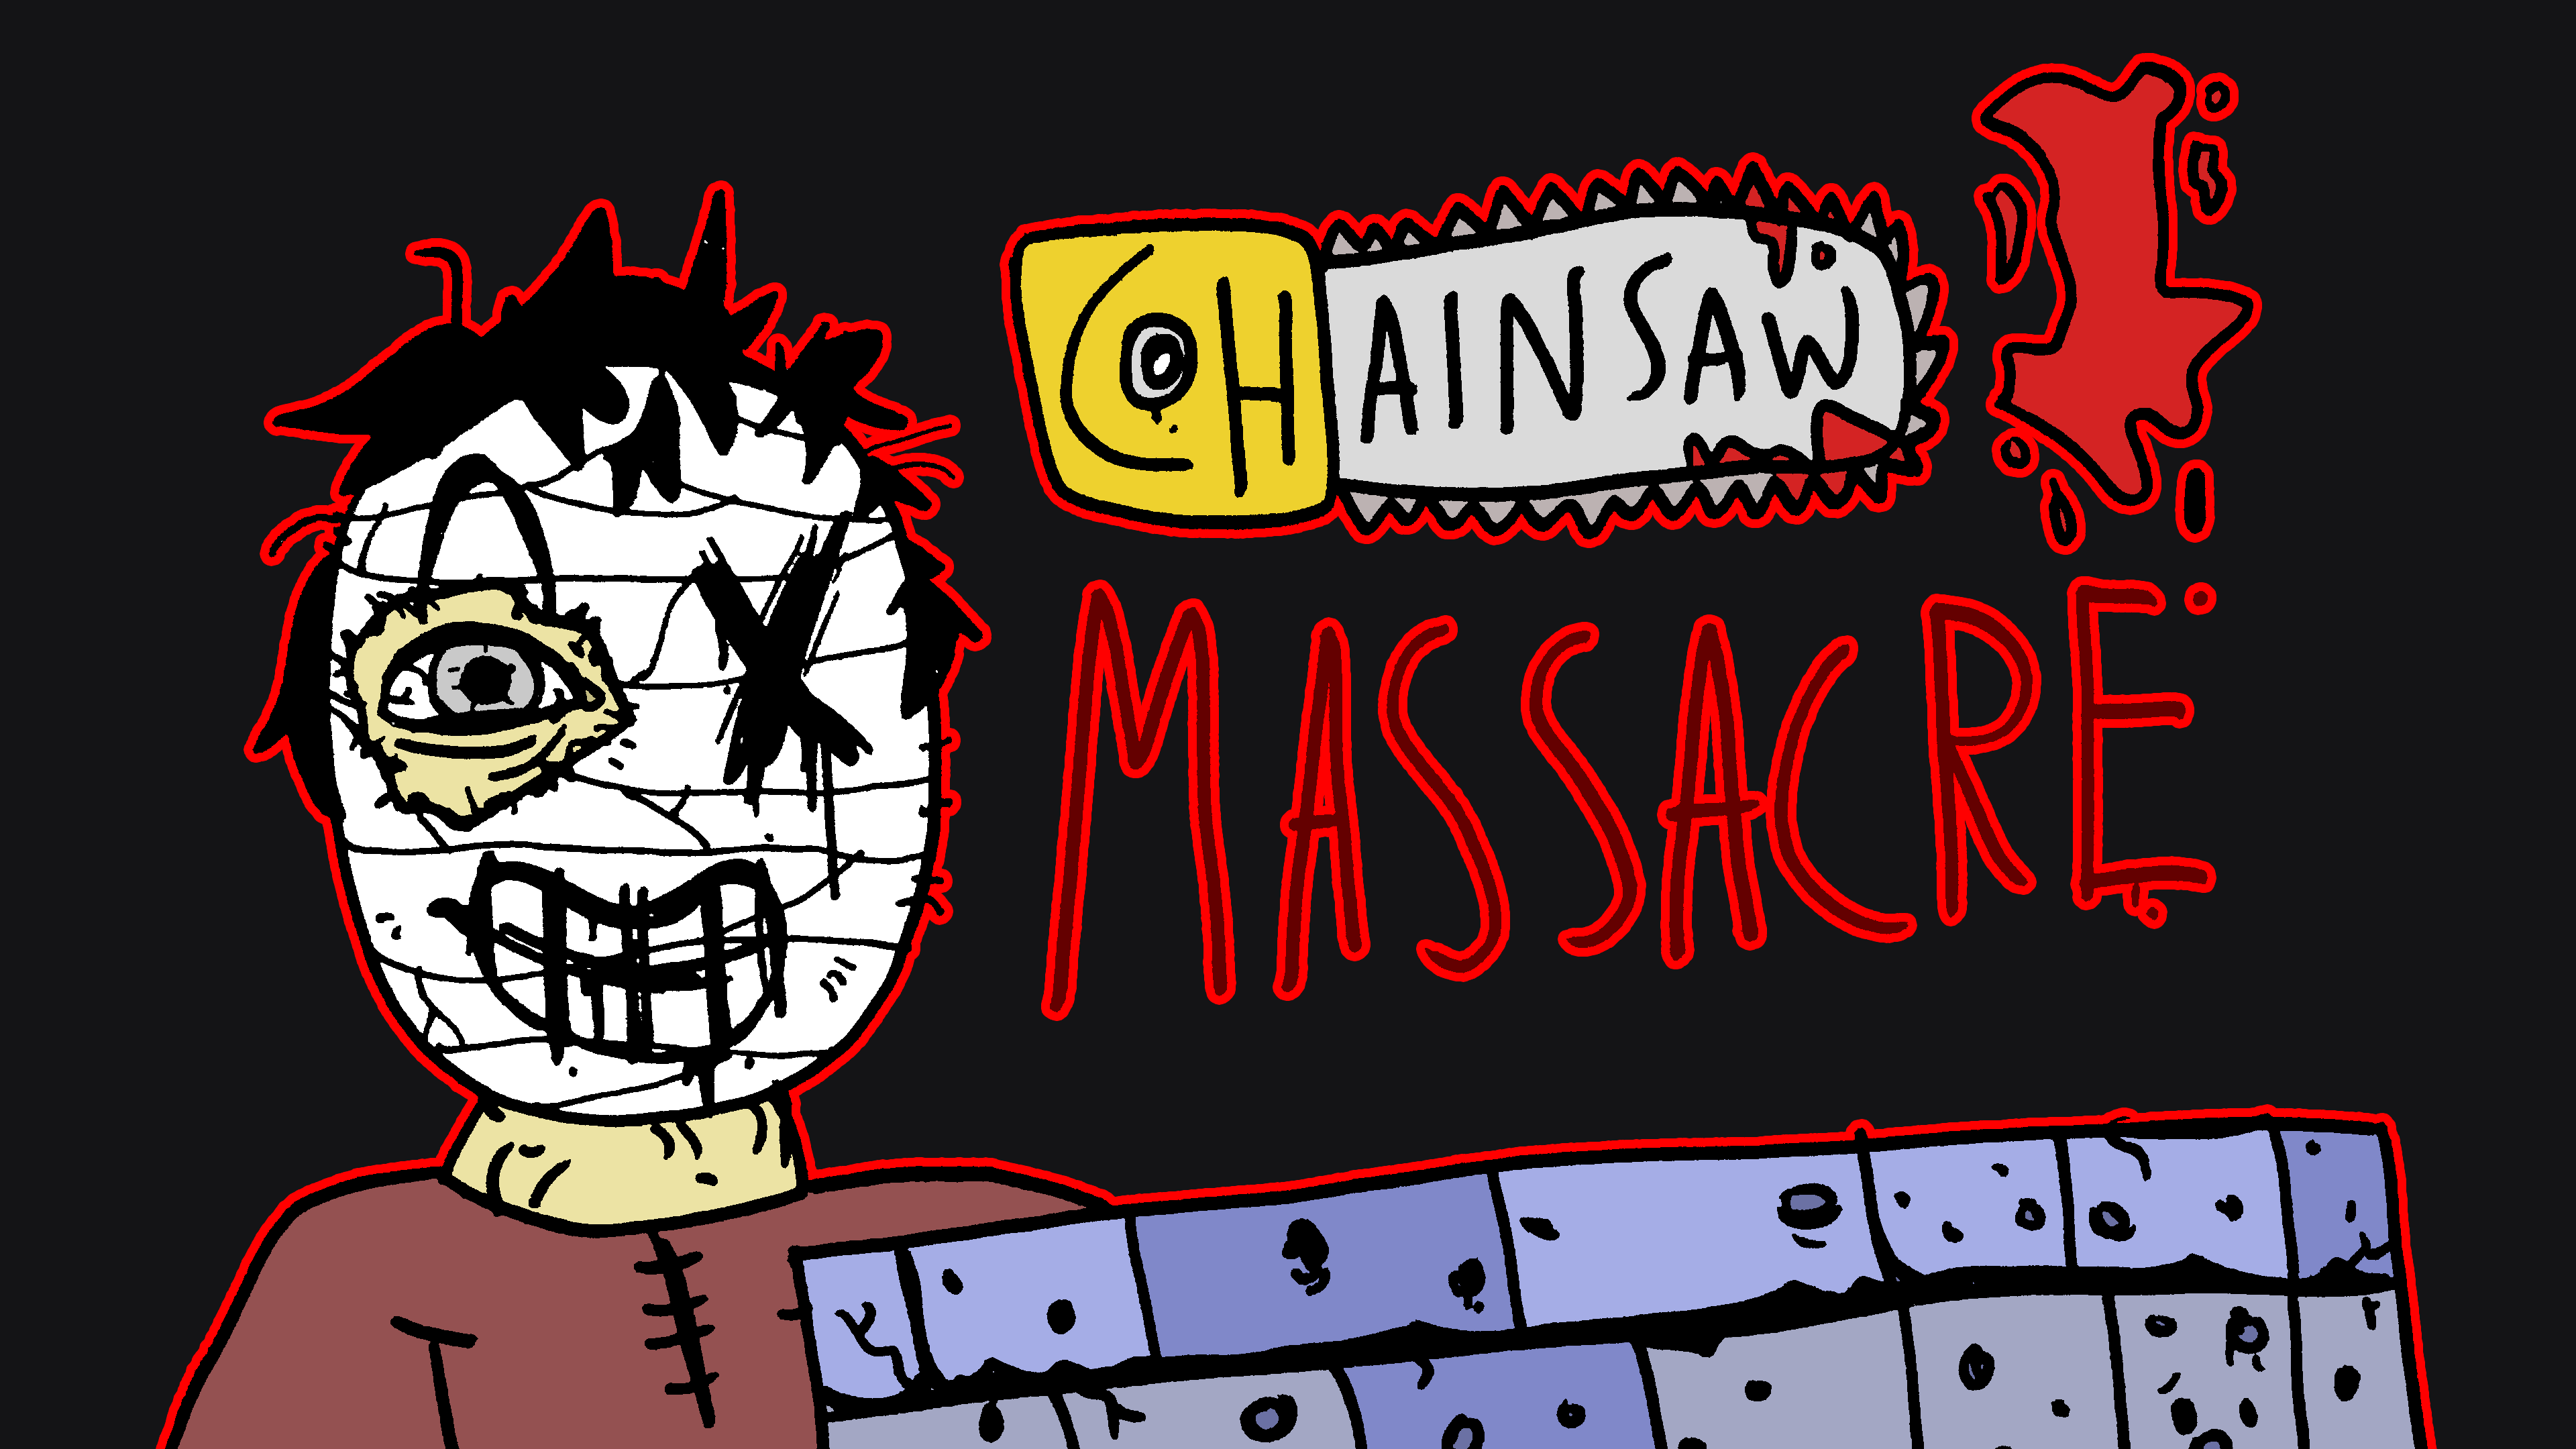 Chainsaw Massacre